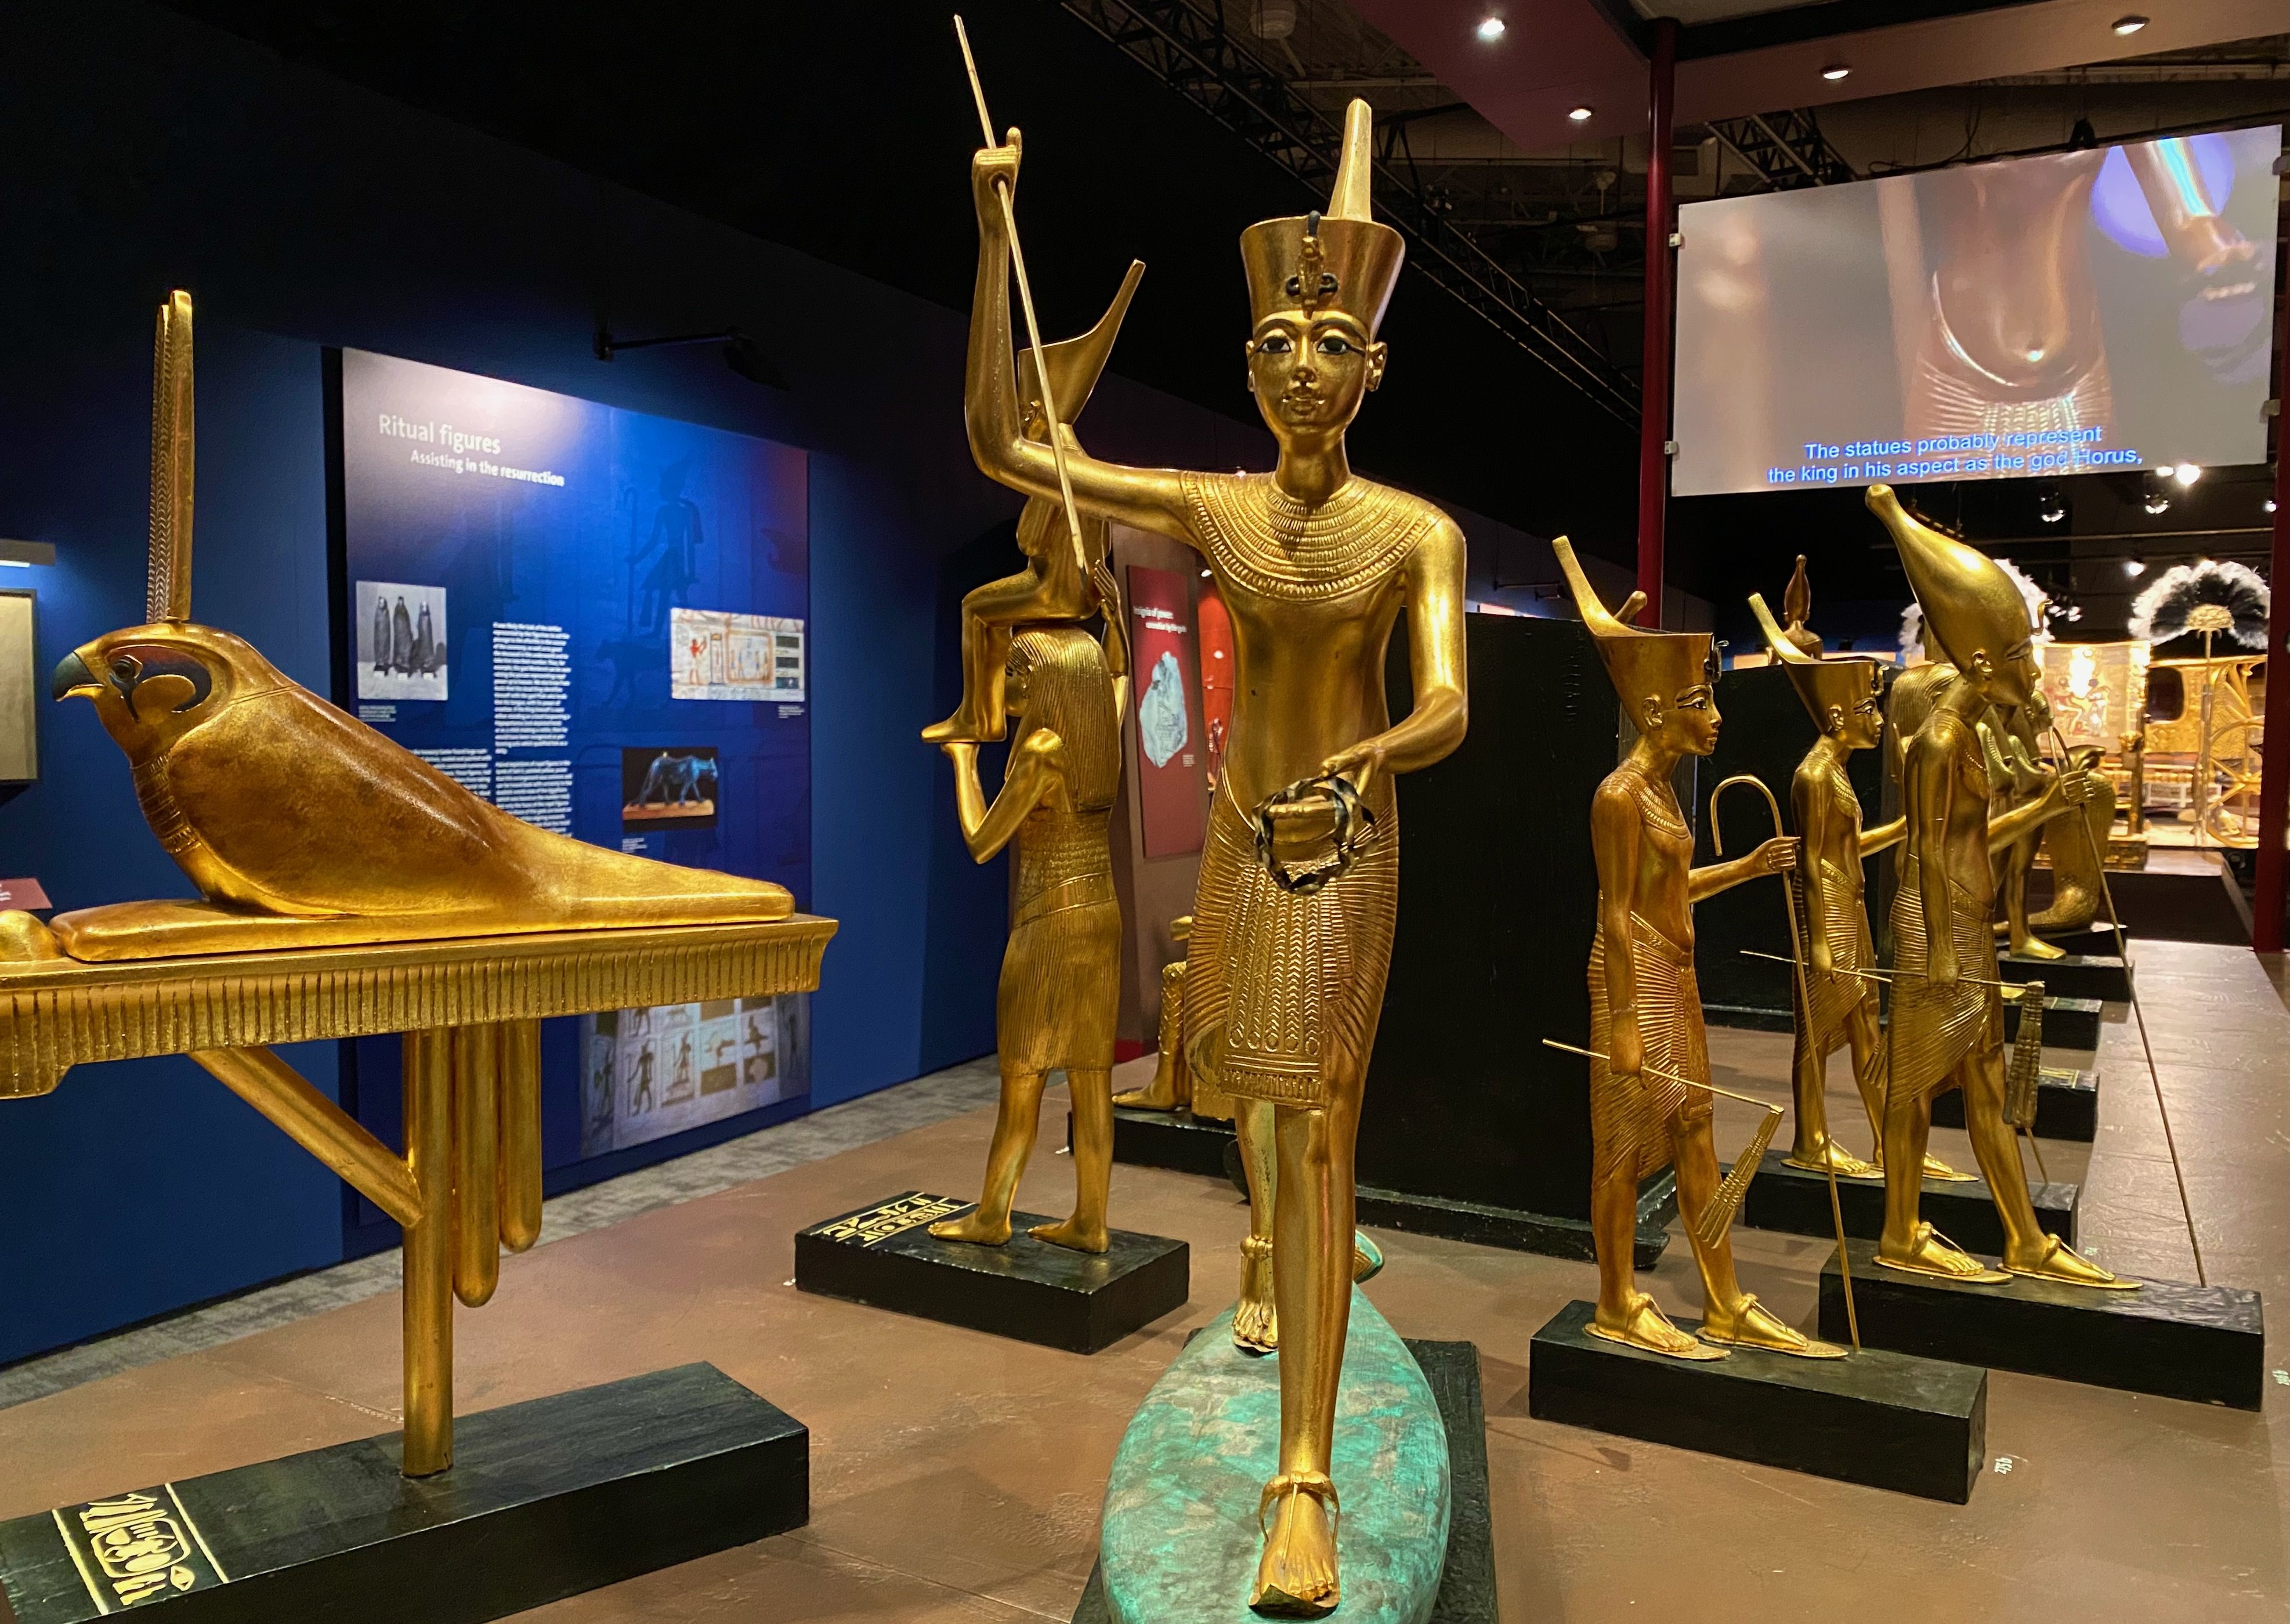 Gold statues of Tutankhamun and Egyptian gods